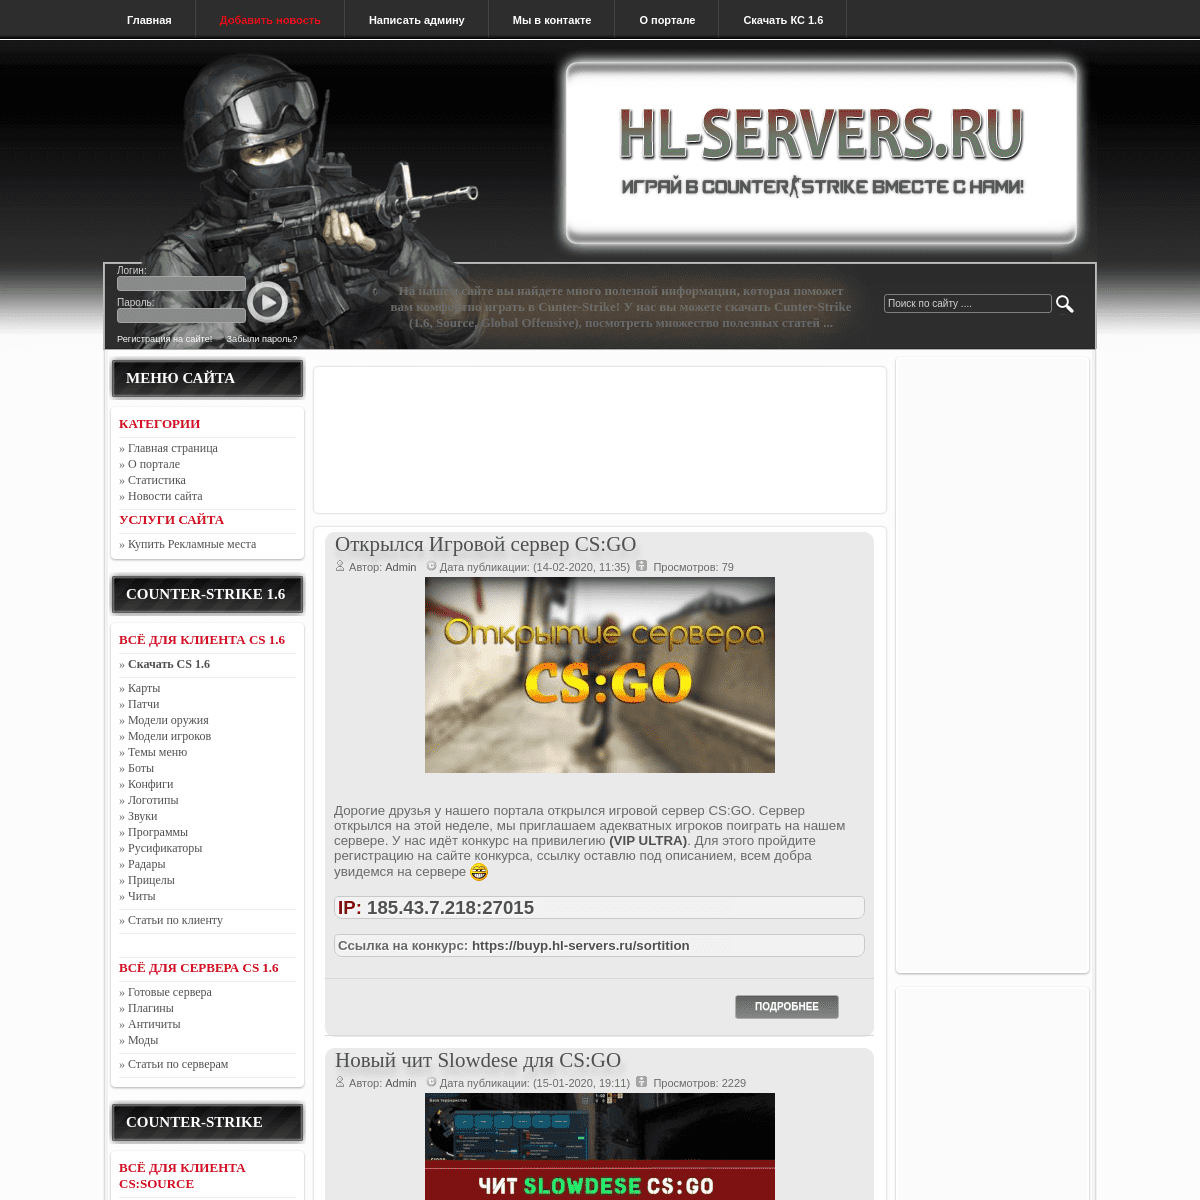 A complete backup of hl-servers.ru